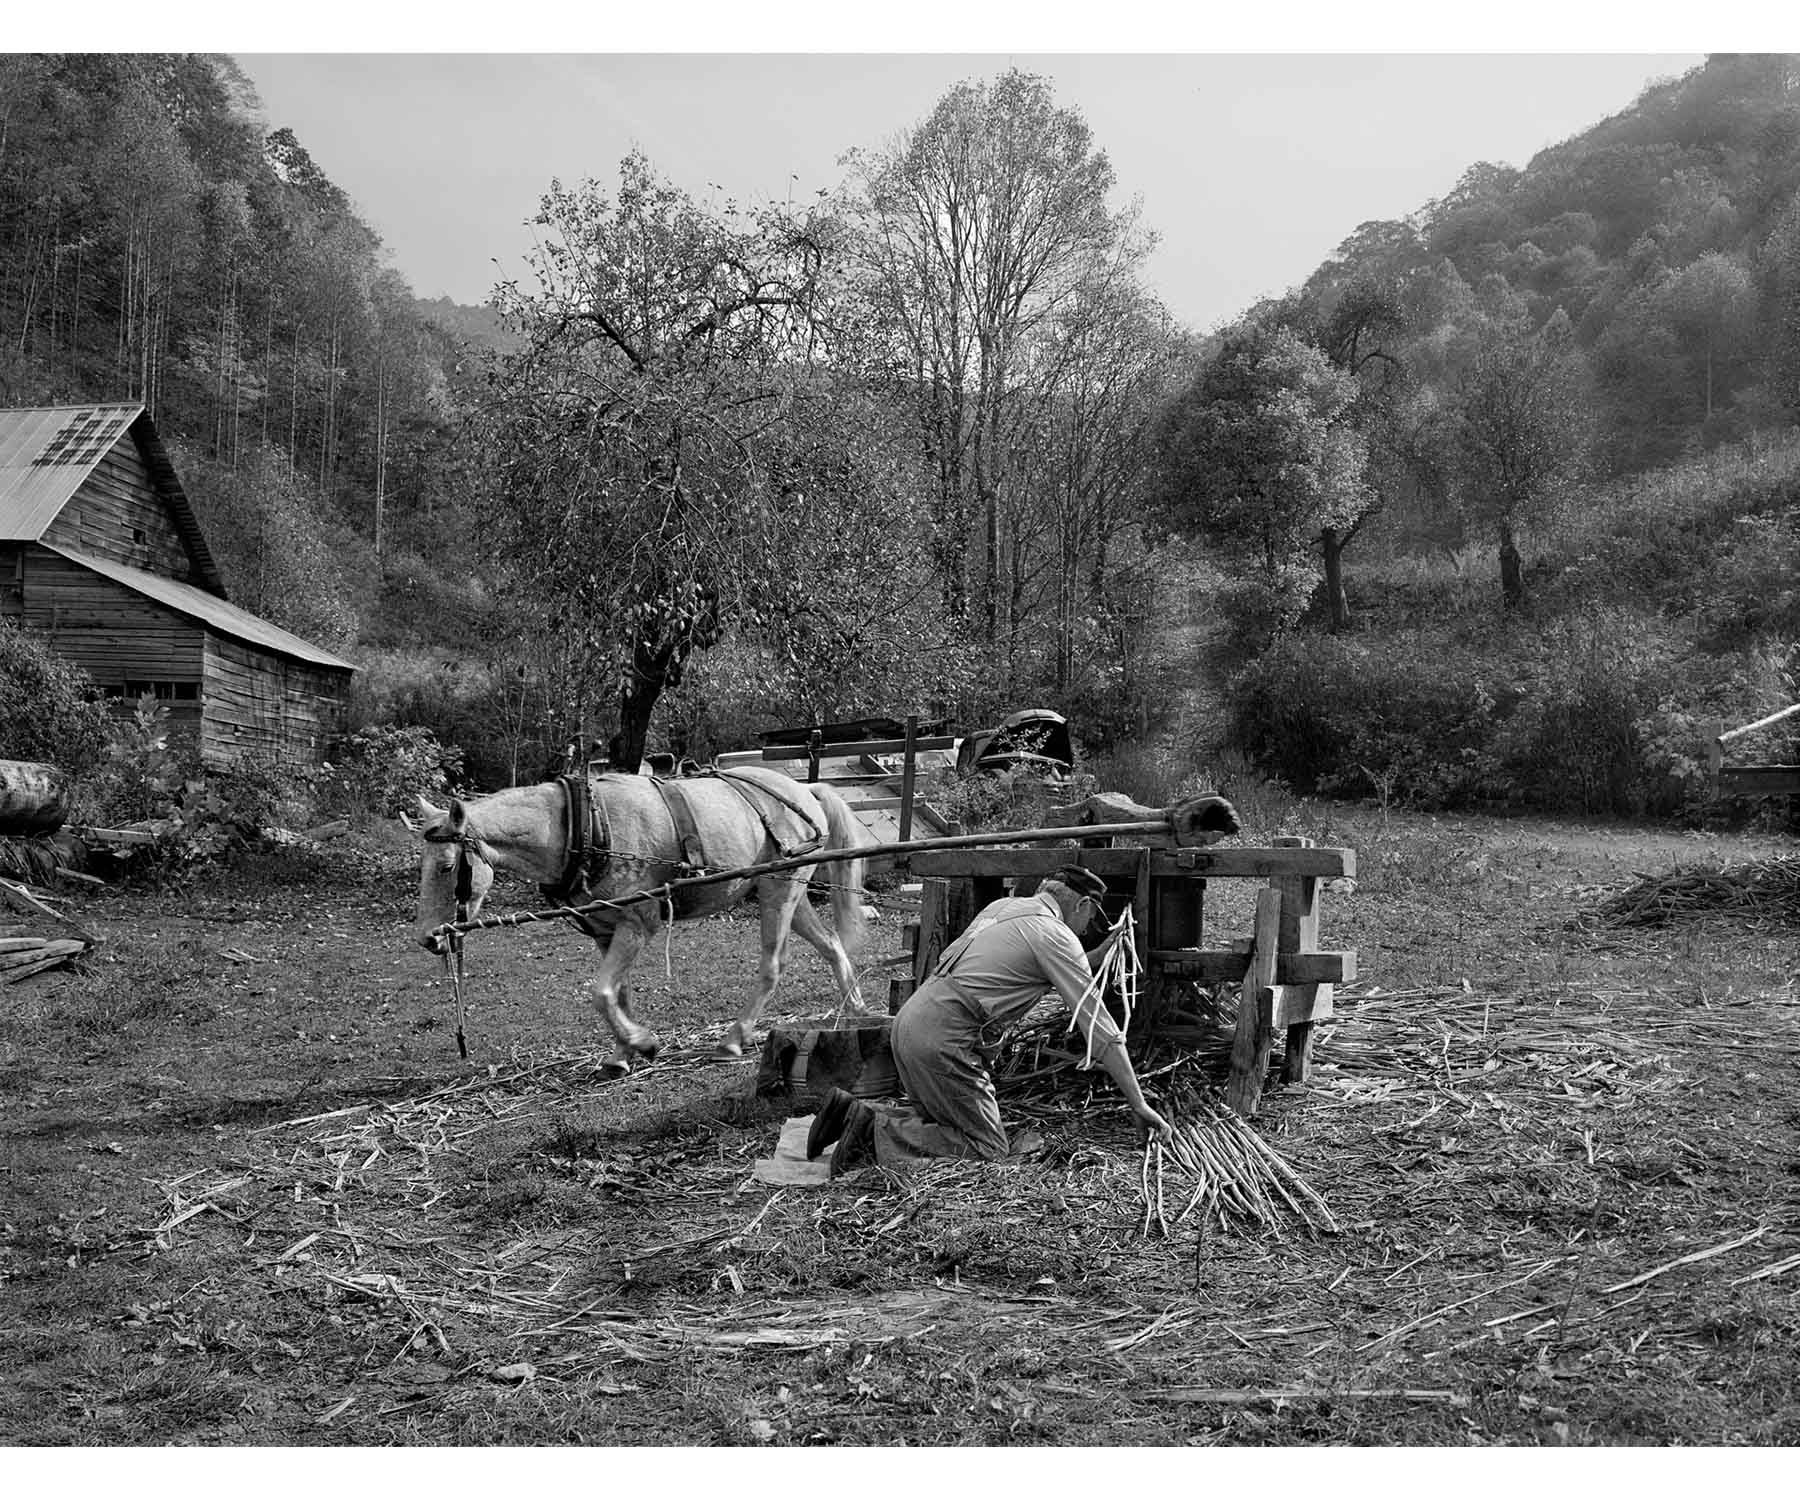 Appalachia Appalachian molasses making horse powered mill Tim Barnwell photographer